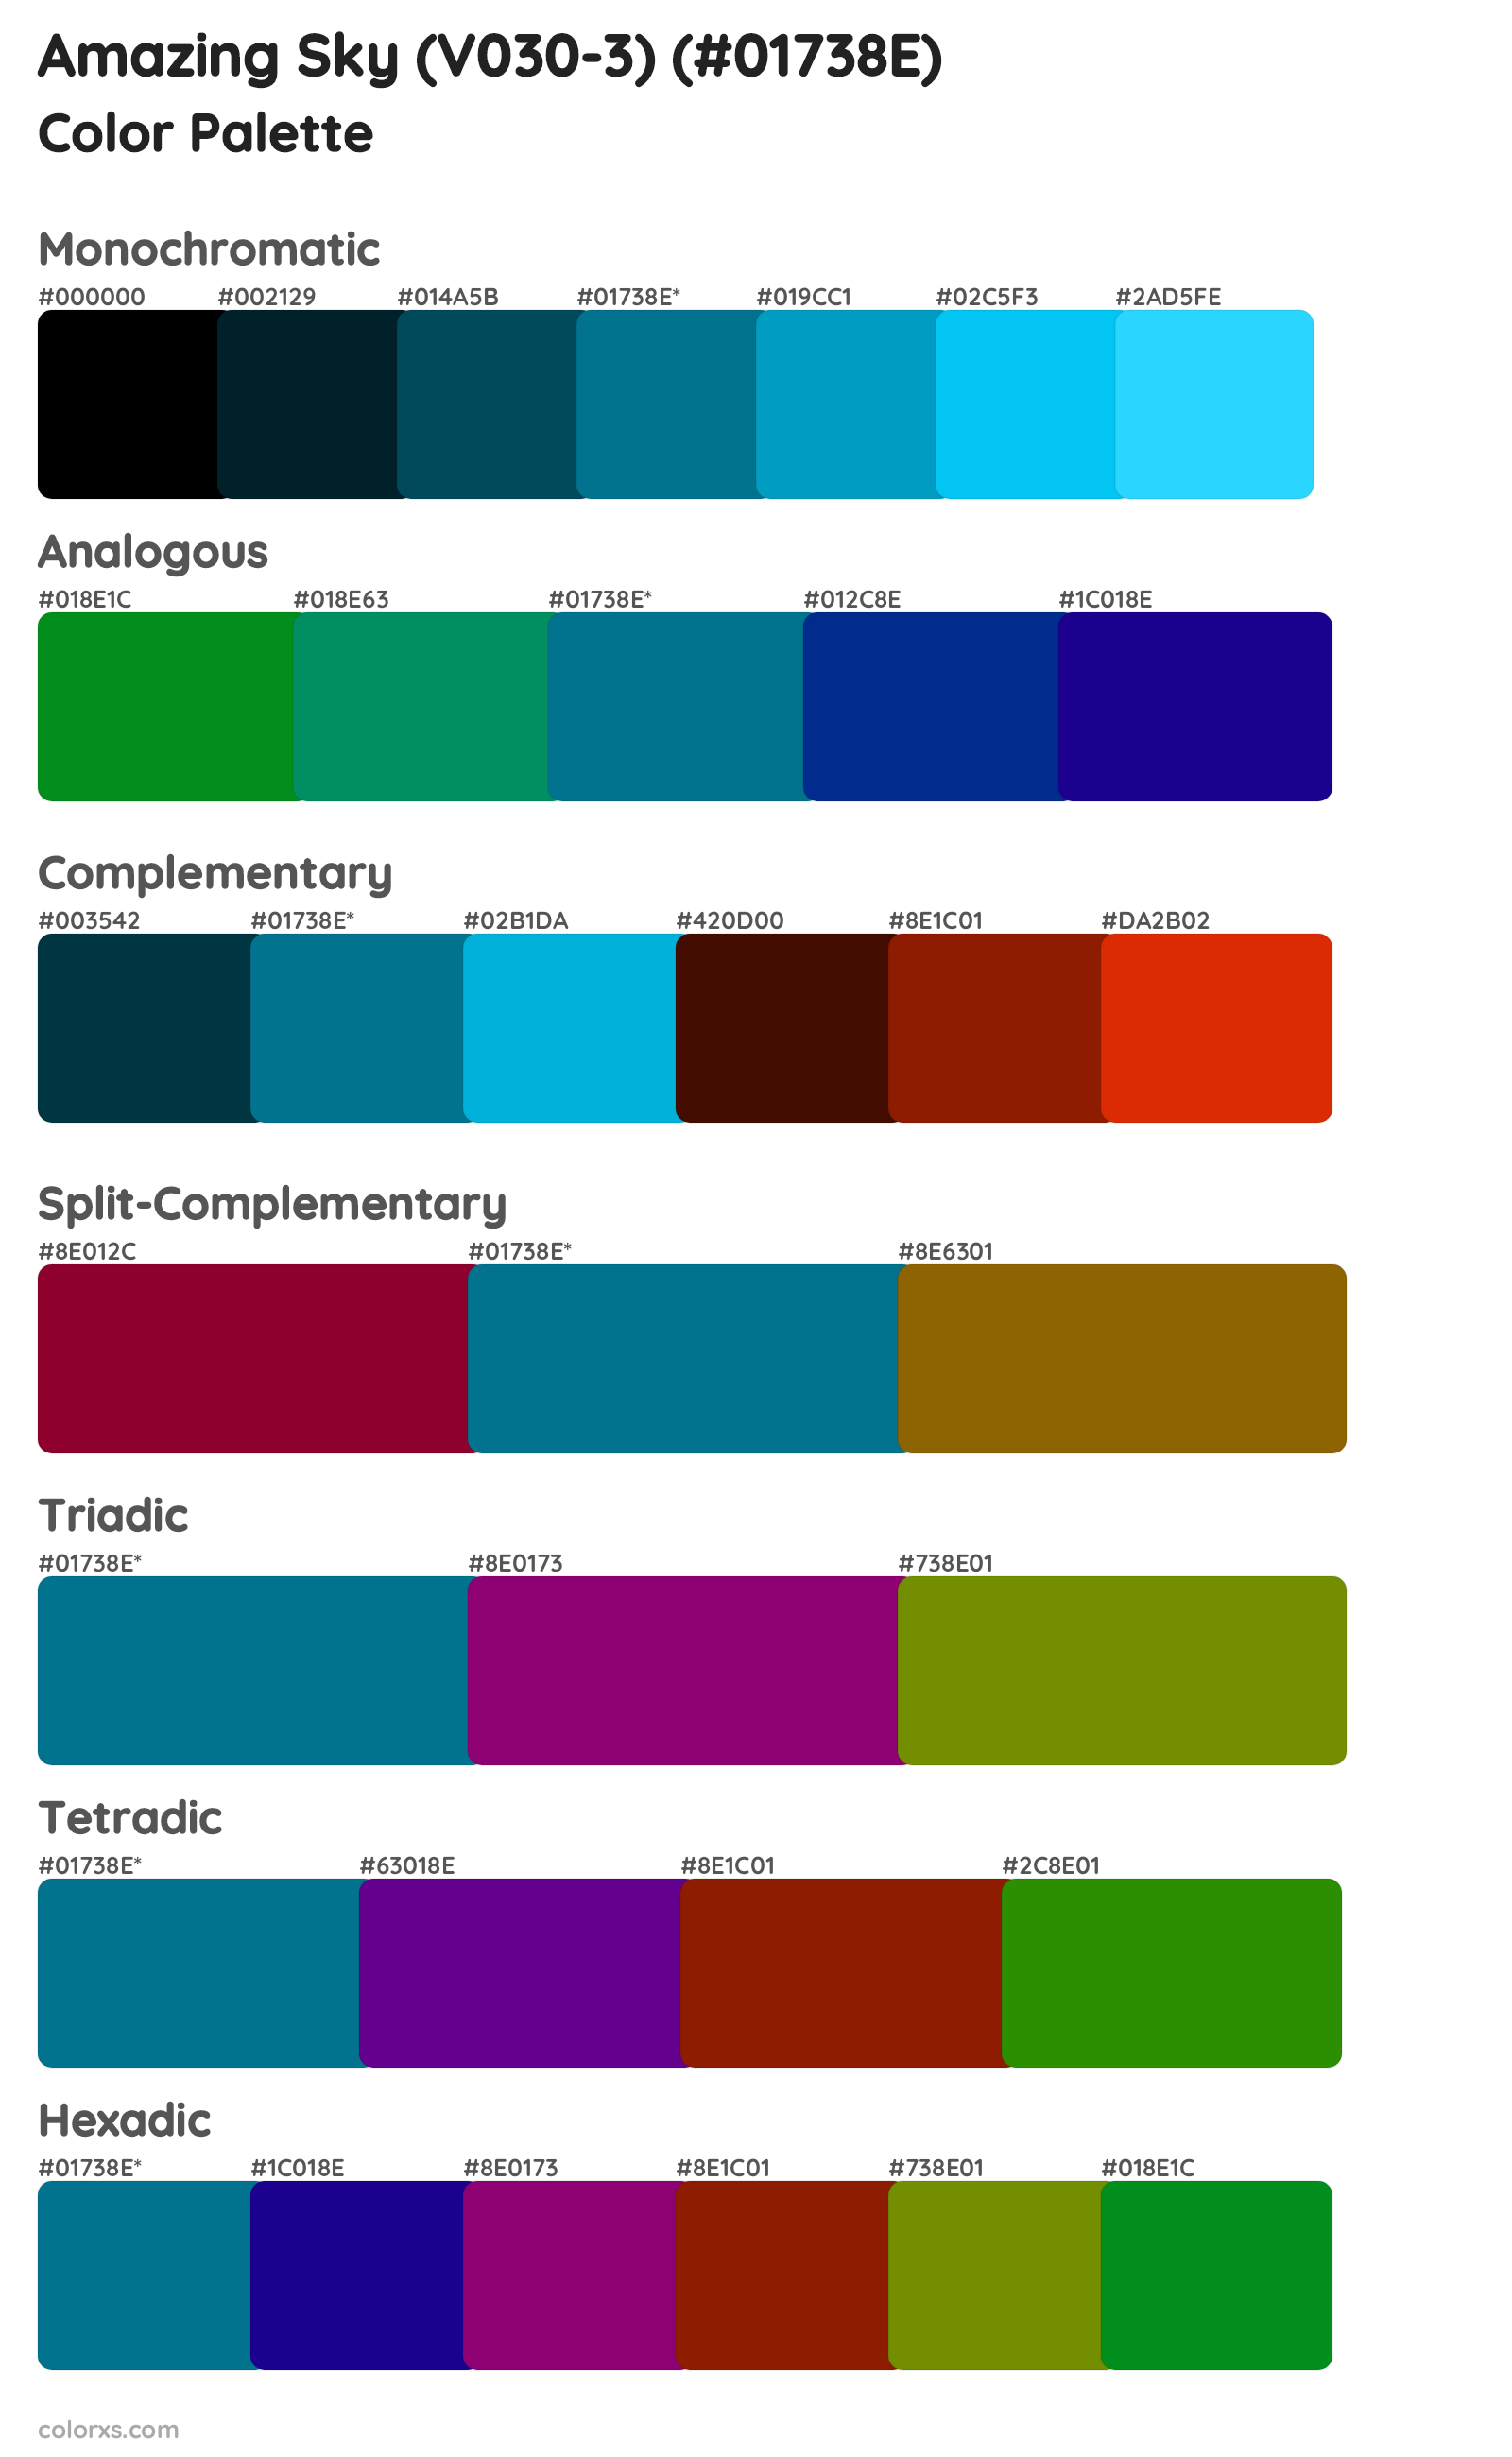 Amazing Sky (V030-3) Color Scheme Palettes